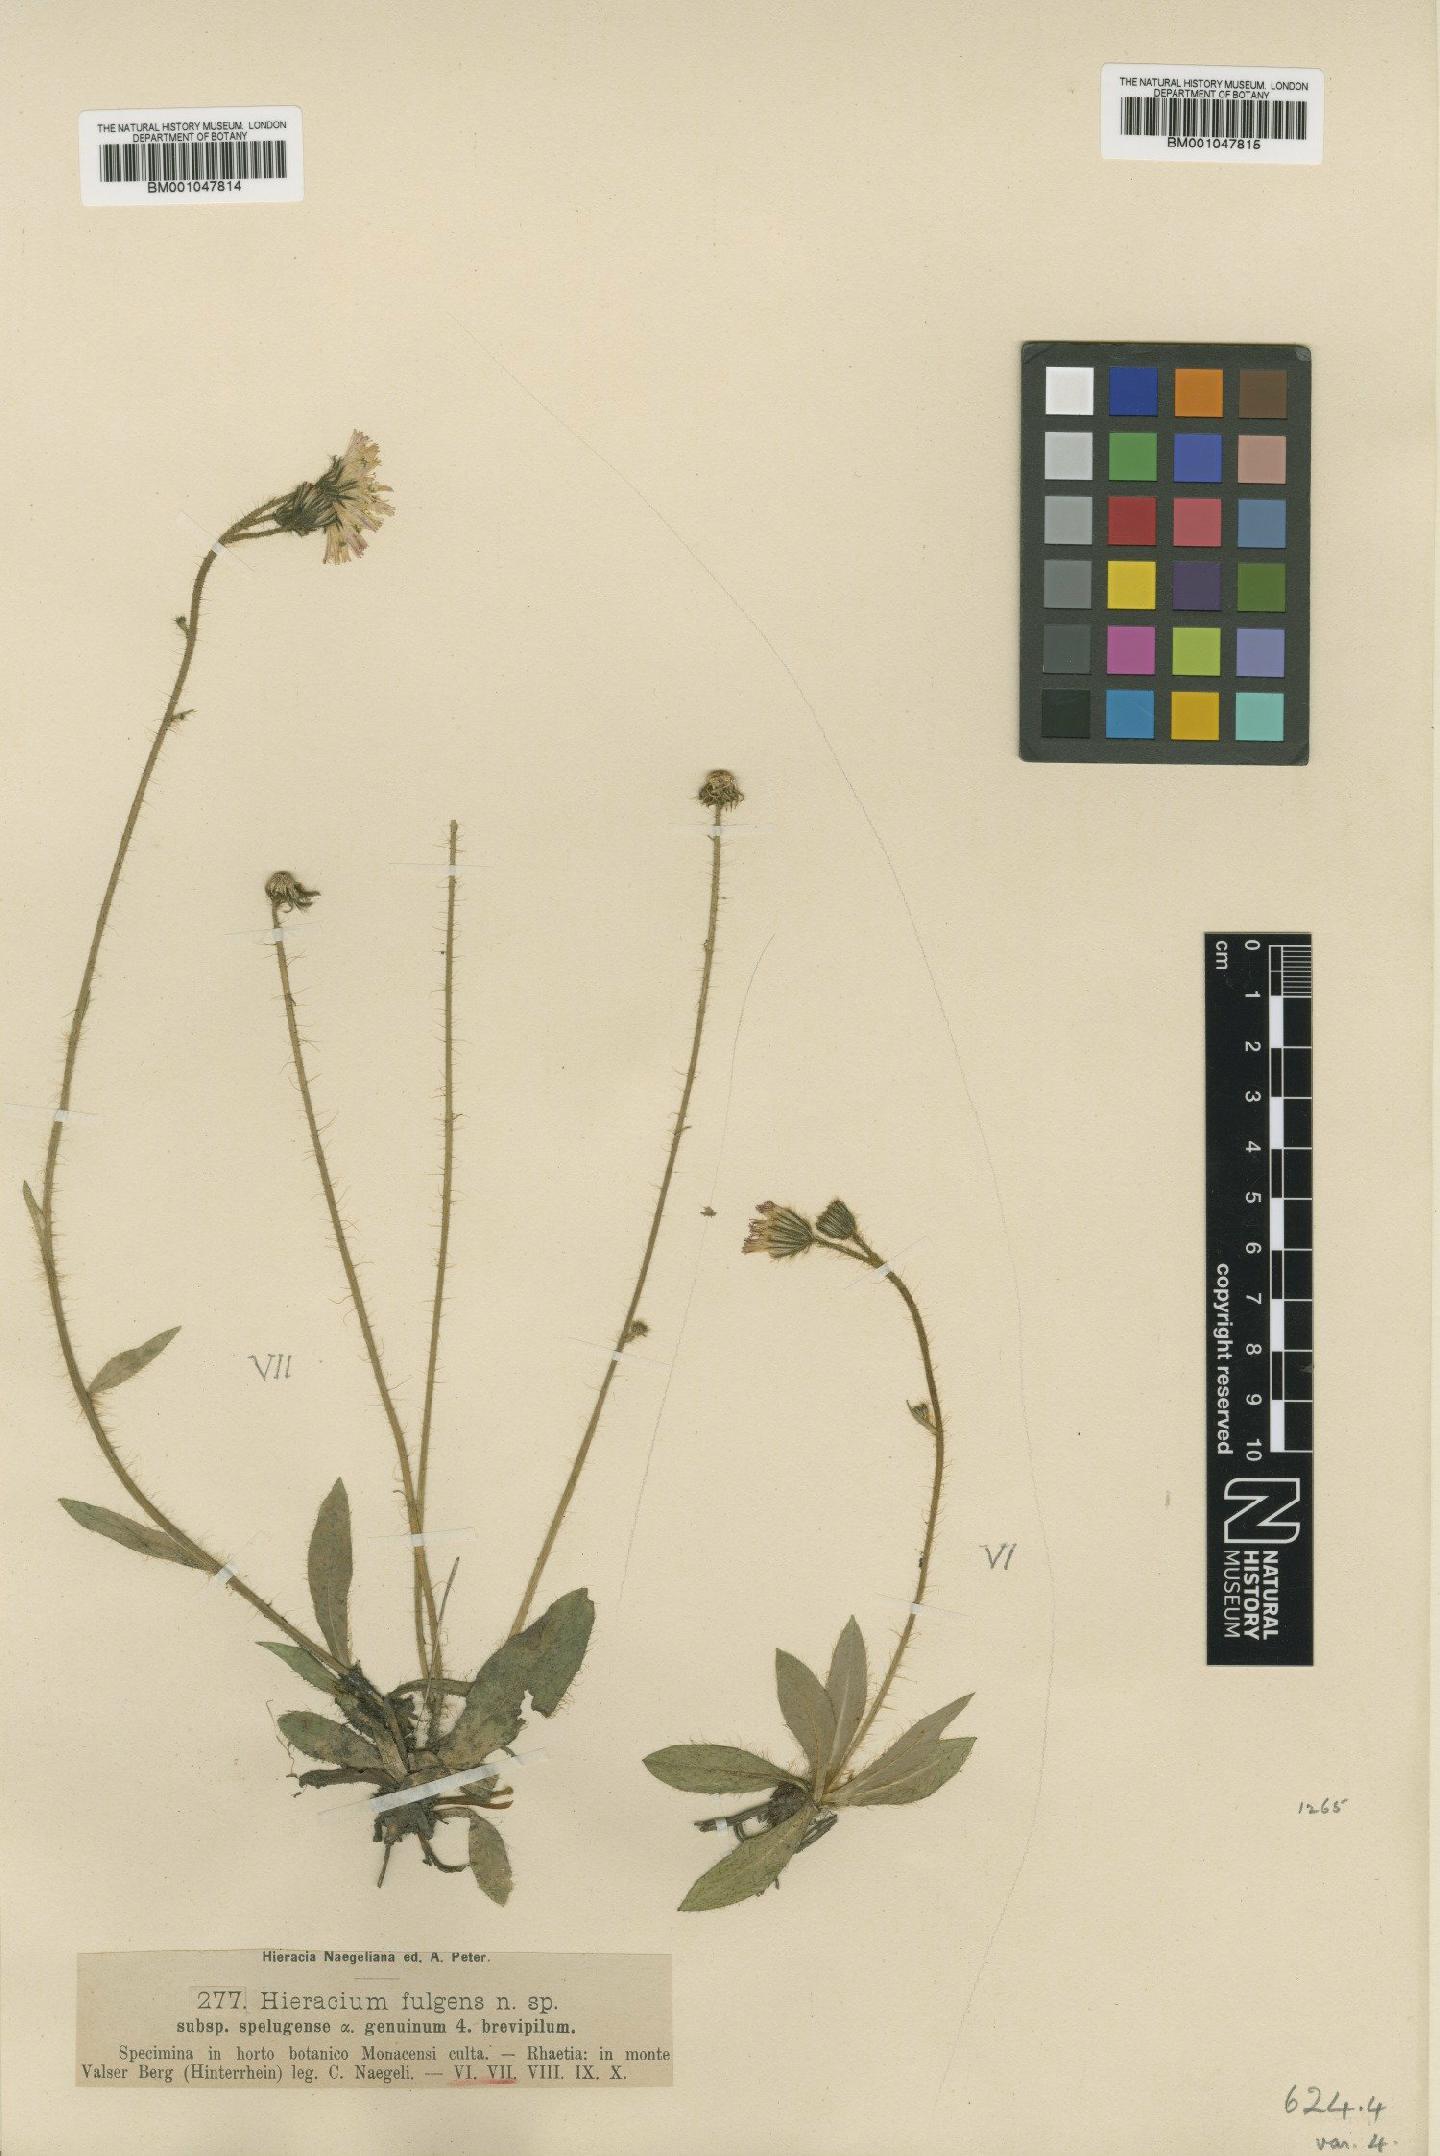 To NHMUK collection (Hieracium fulgens subsp. spelugense Nägeli & Peter; NHMUK:ecatalogue:2816572)